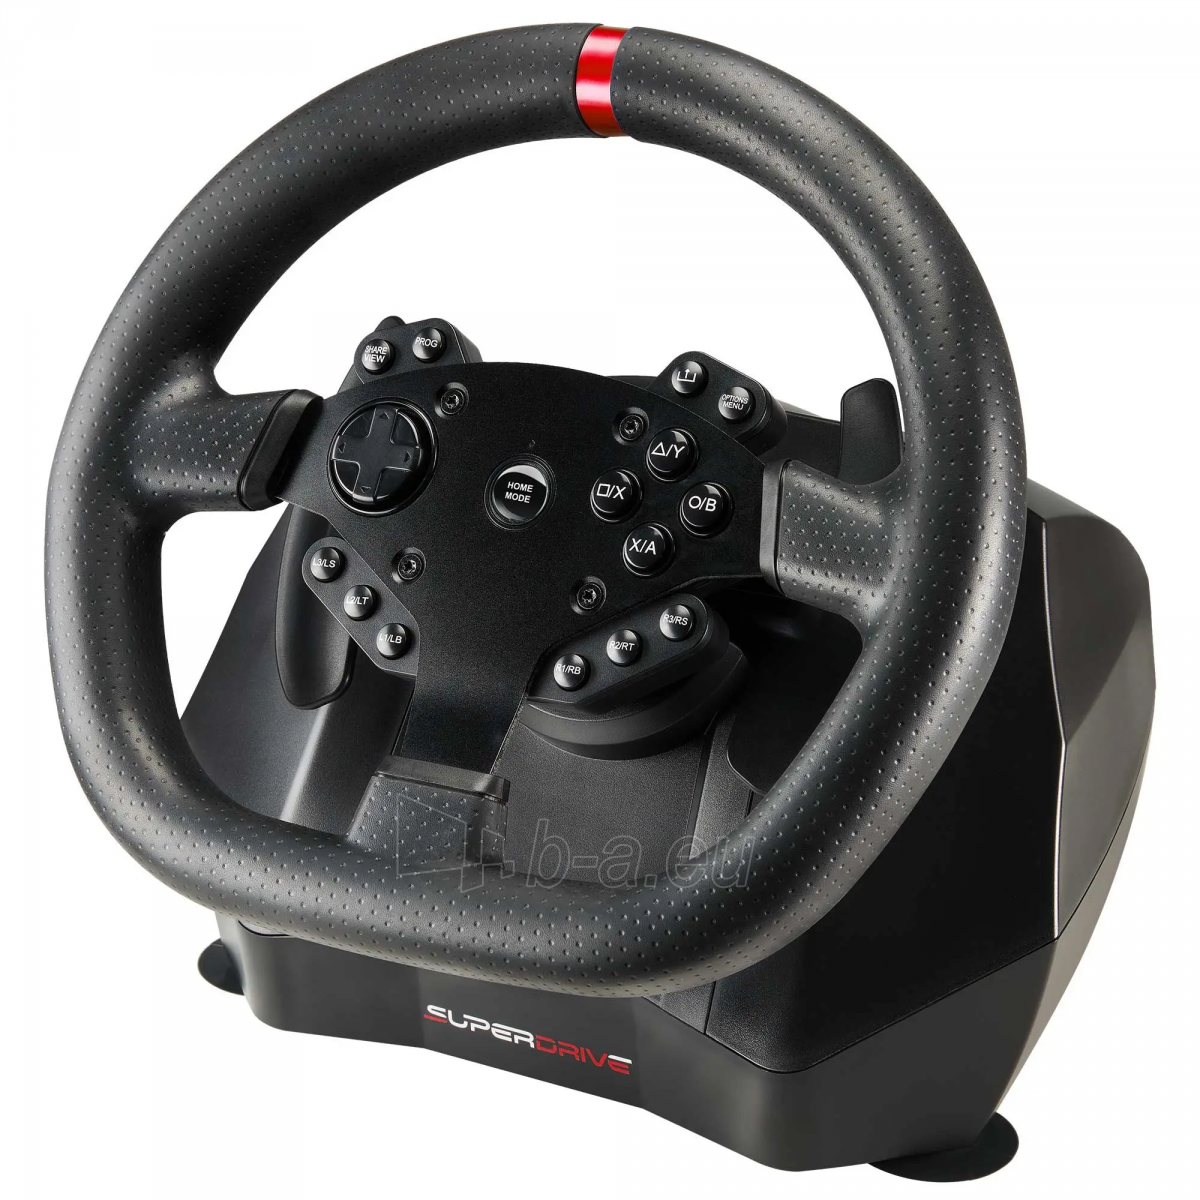 Vairalazdė Subsonic Superdrive GS 950-X Racing Wheel (PC/PS4/XONE/XSX) paveikslėlis 8 iš 10